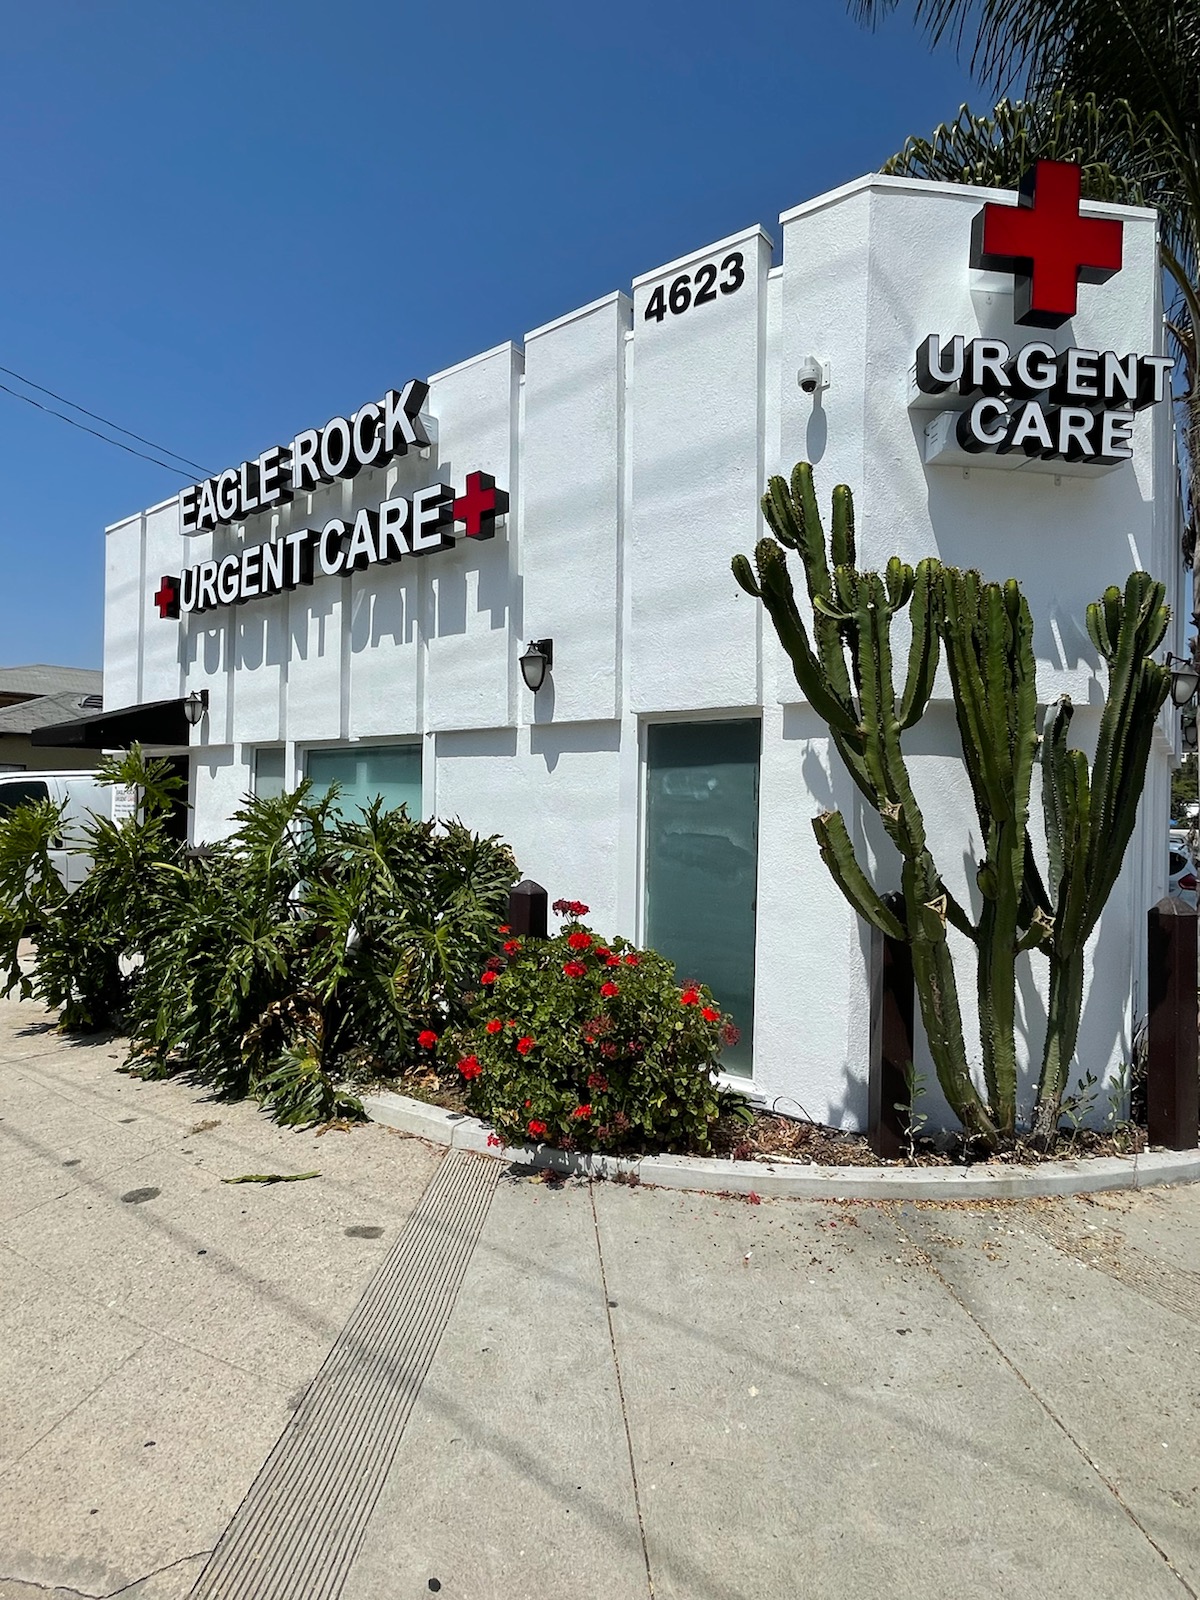 Photo of UrgentMED Eagle Rock Urgent Care COVID Testing at 4623 Eagle Rock Blvd, Los Angeles, CA 90041, USA